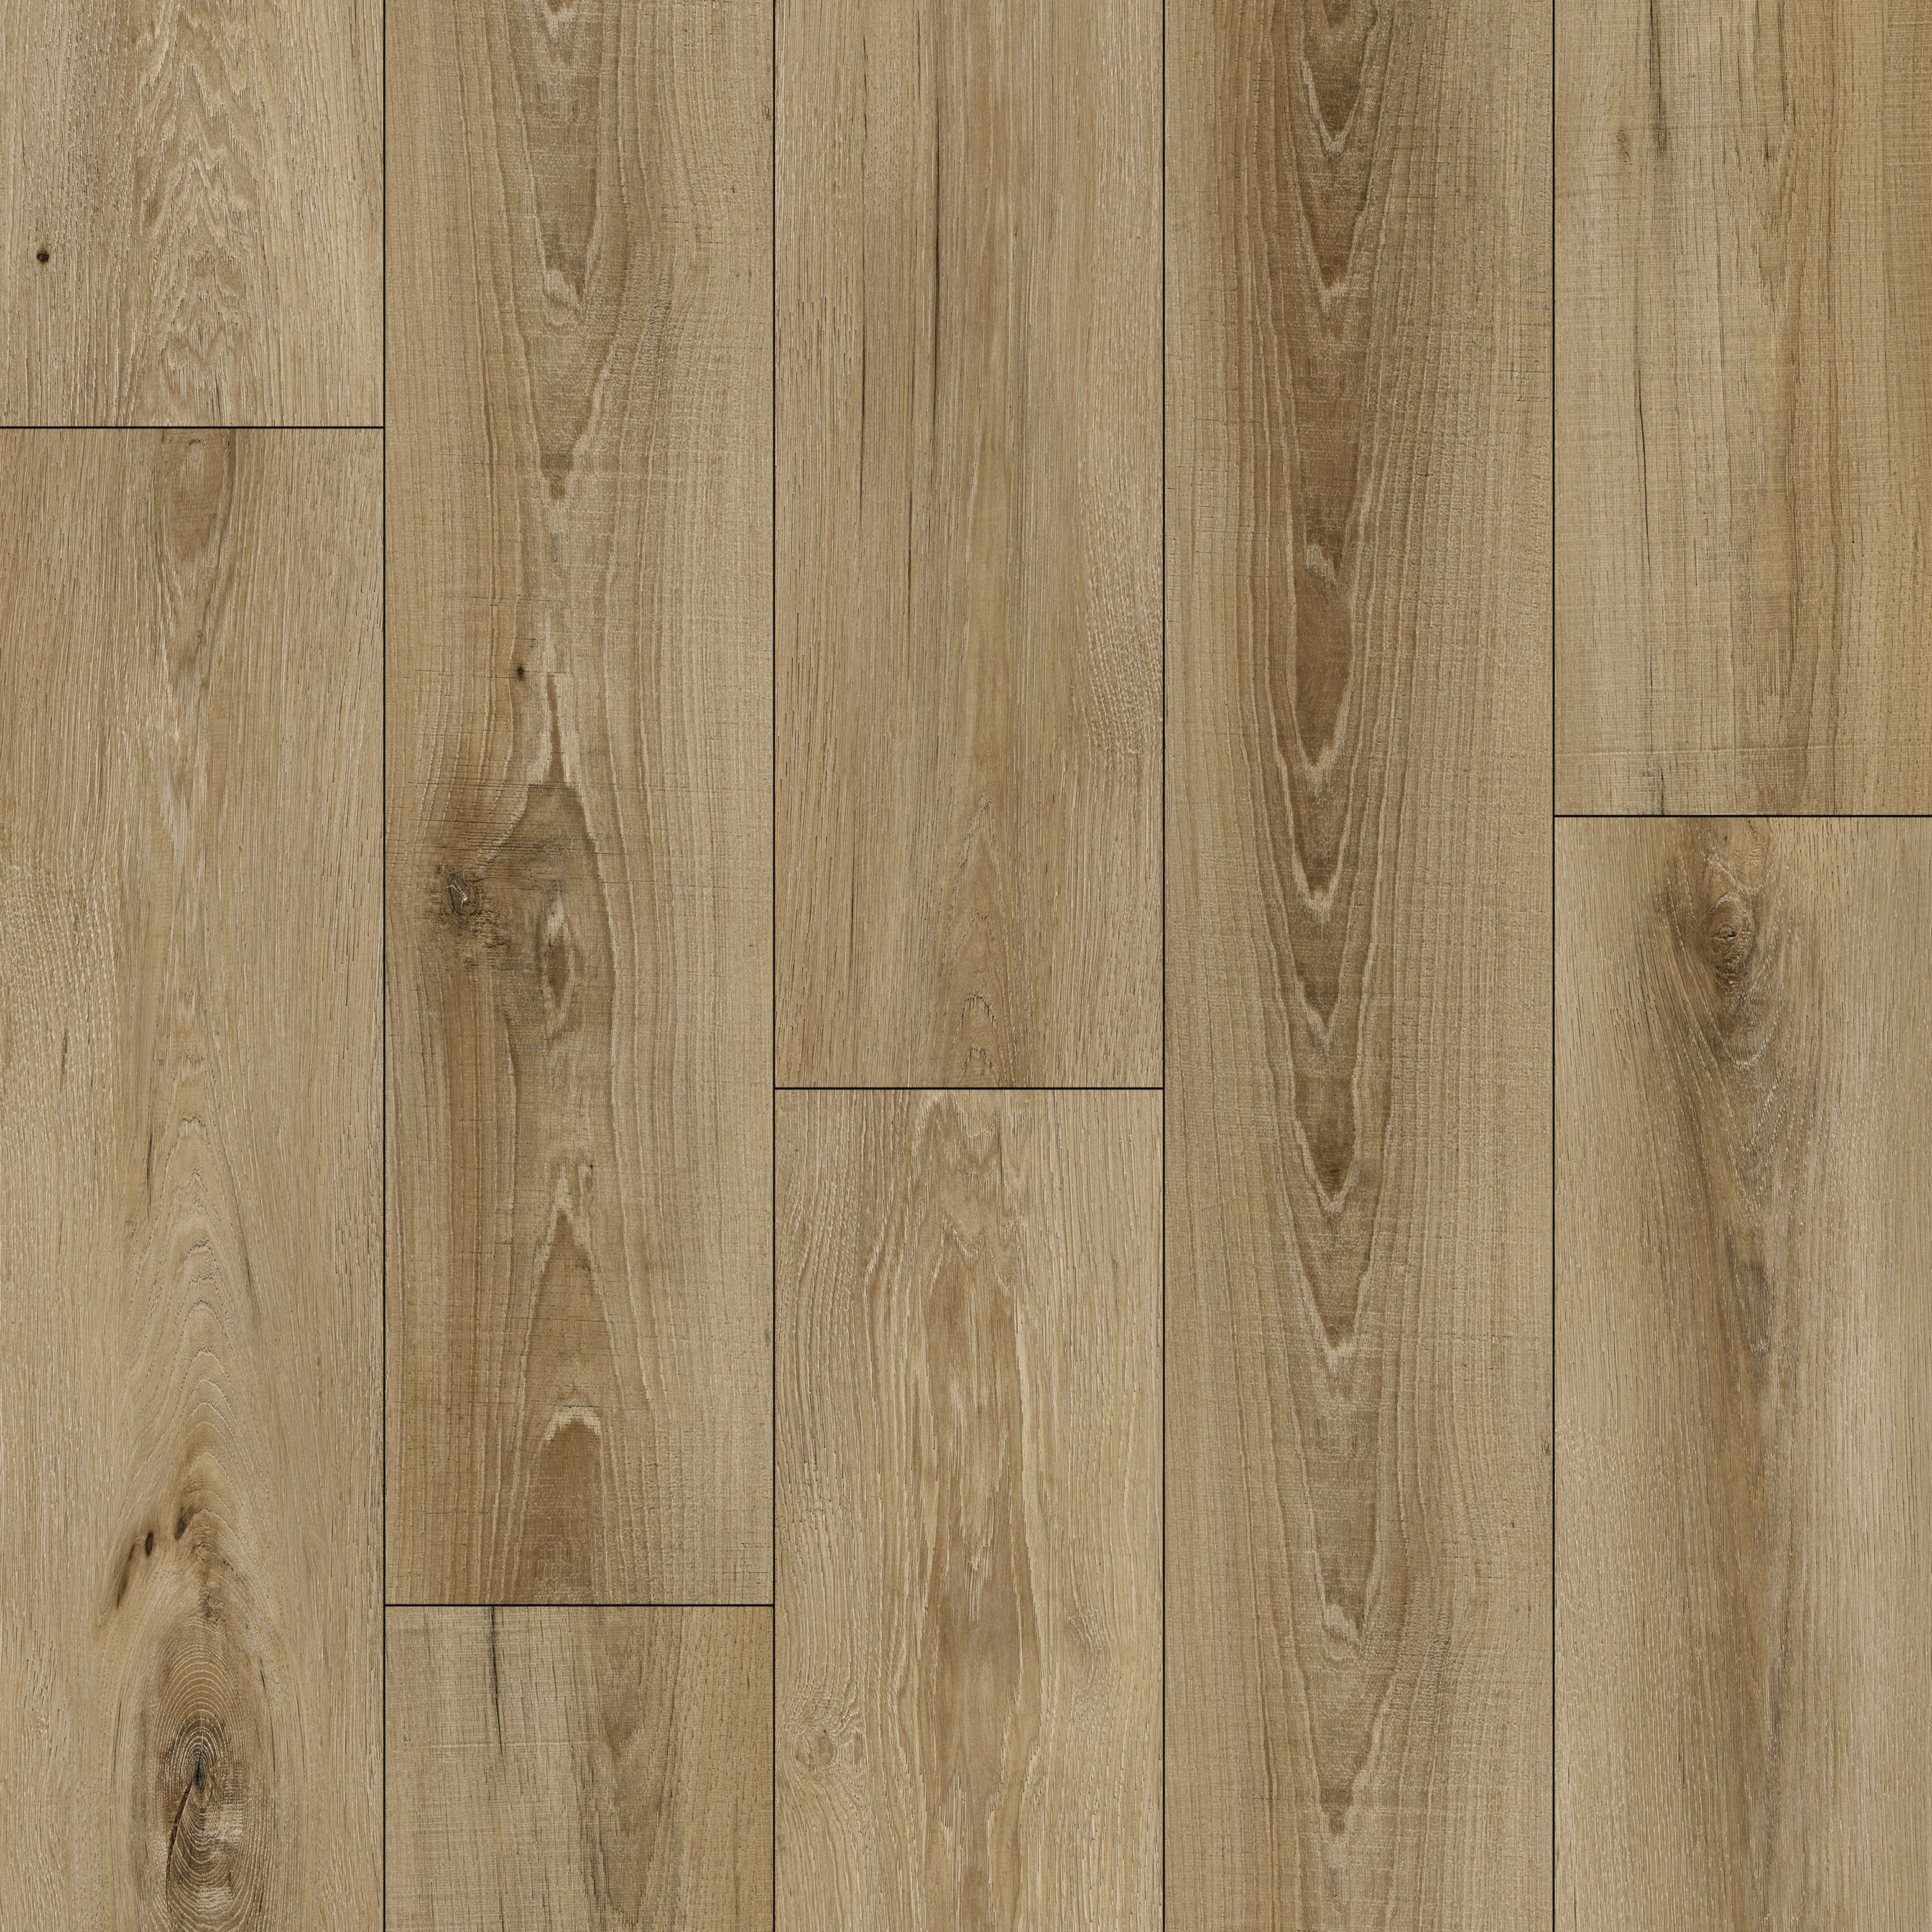 2020 New Style Horizontal Toast Bamboo Flooring -
 Free Sample SPC Click Floorings Waterproof Thickness PVC Flooring Commercial Wooden PVC Vinyl Flooring – Kangton